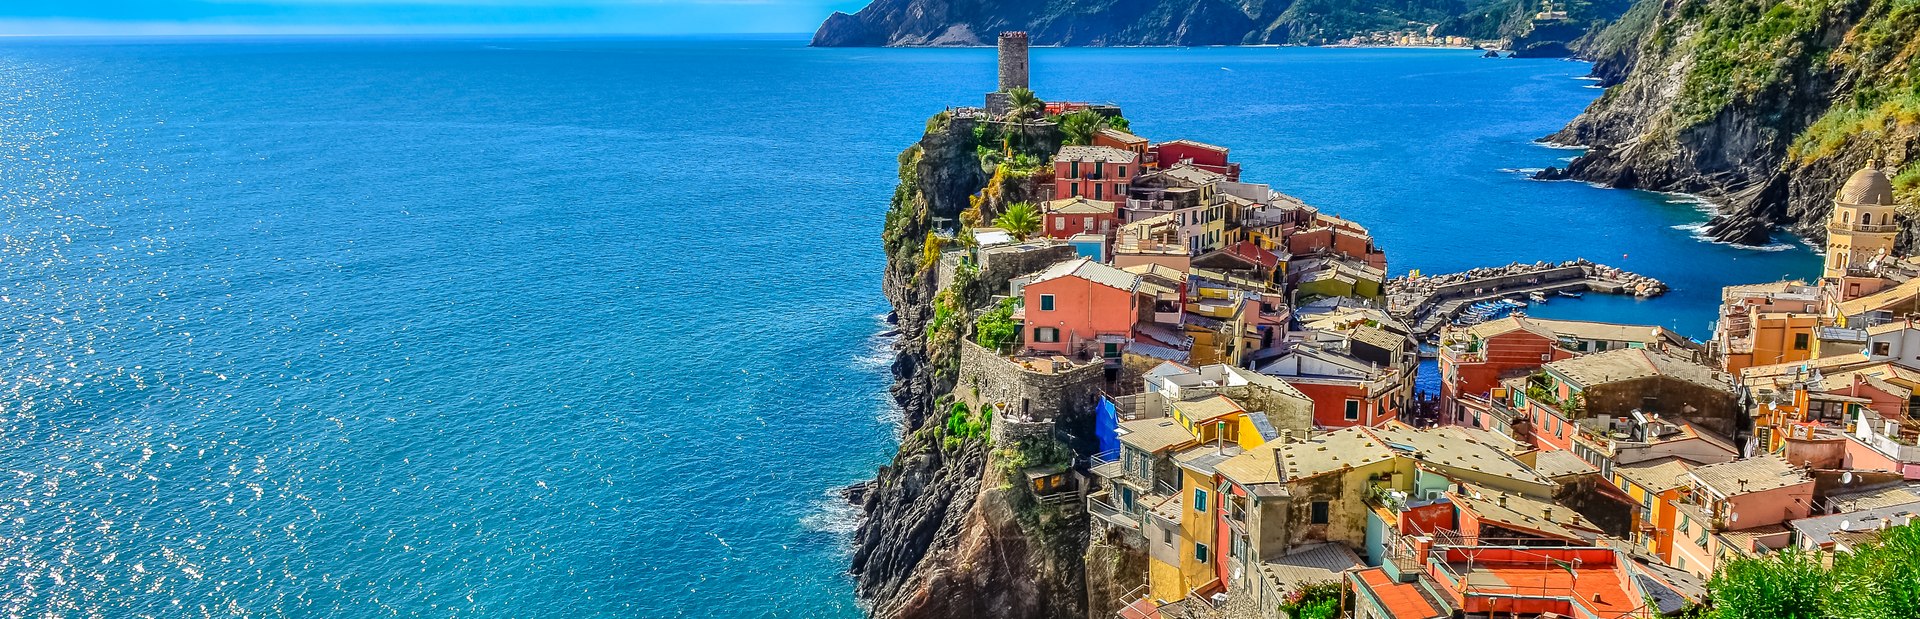 Where should I go on an Italy yacht charter?